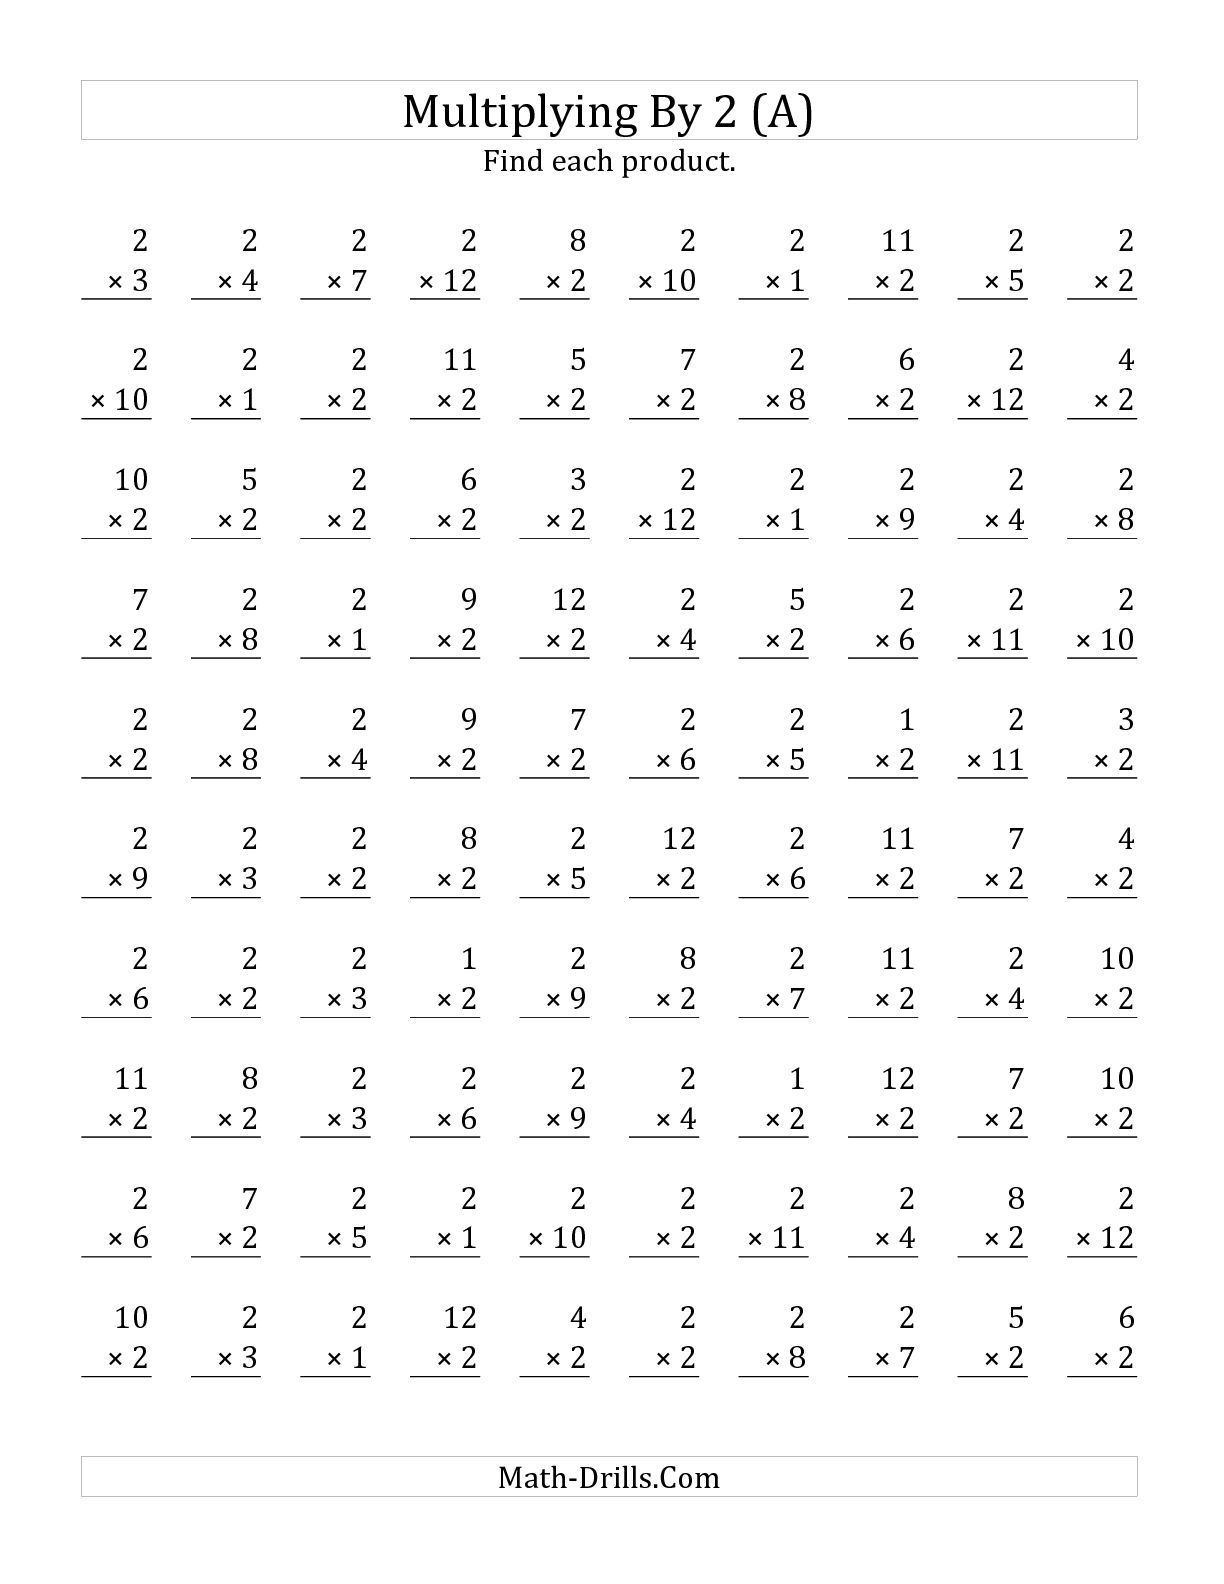 minute-math-multiplication-worksheets-3-jpg-pdf